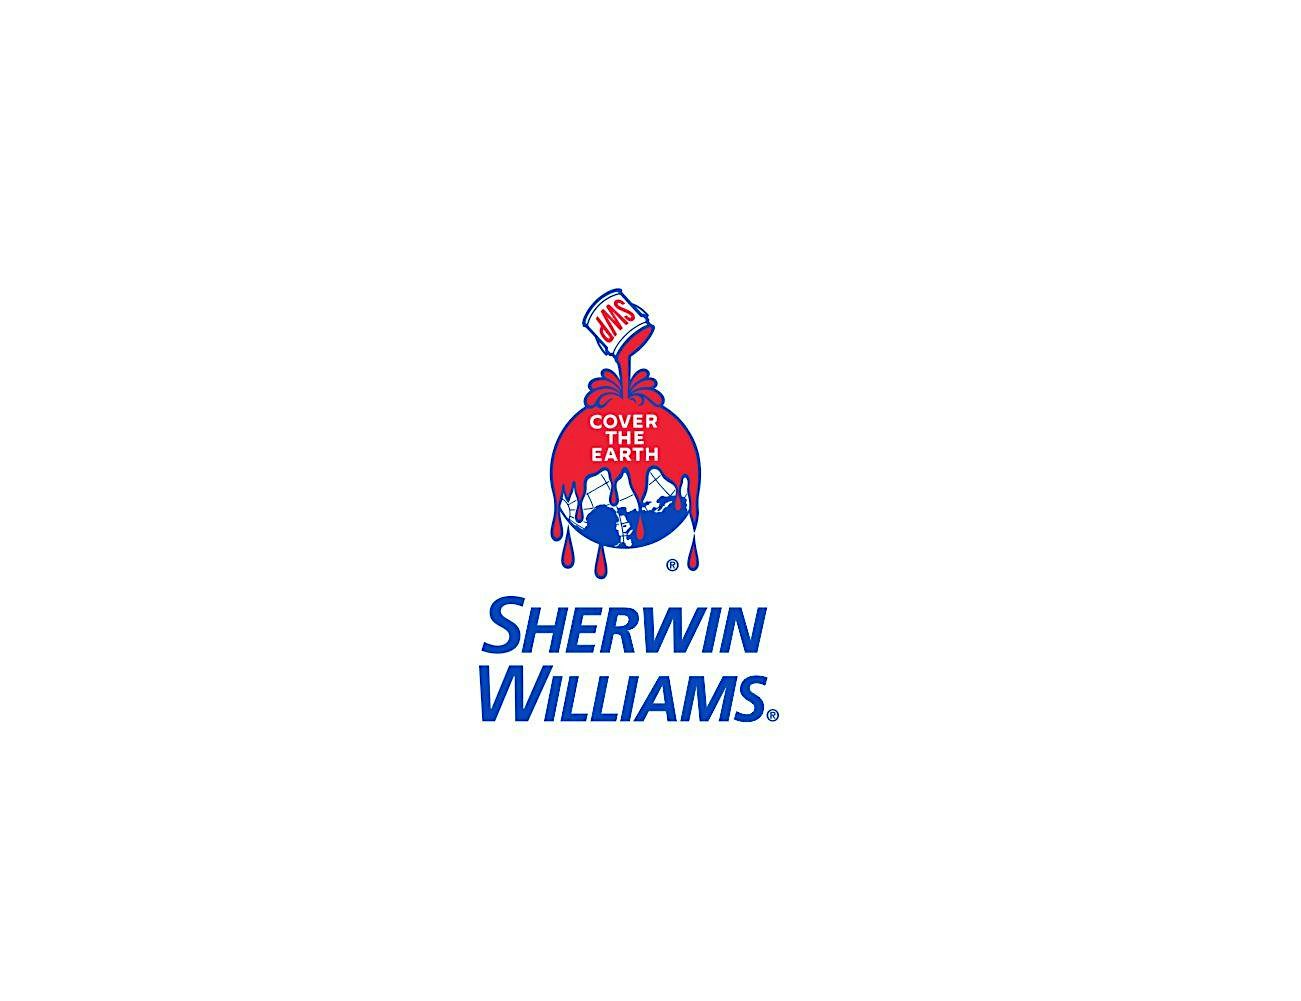 Sherwin Williams Private Virtual Job Fair by CareerTown.AI